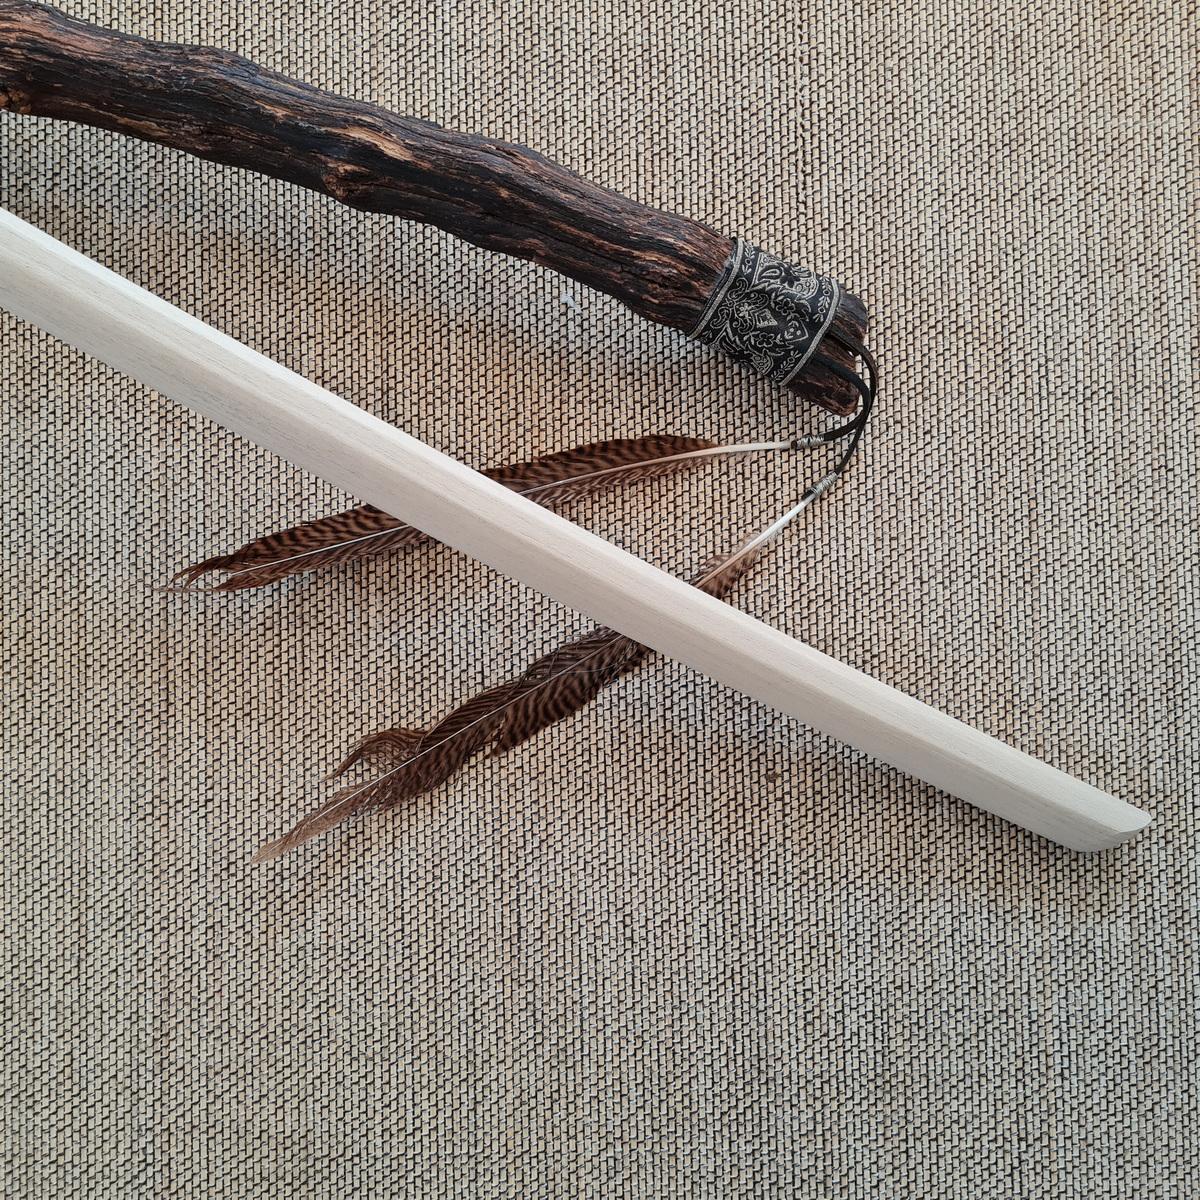 Bokken made of Kiri wood ➽ www.bokken-shop.de ✅ suitable for Aikido ✓ Iaido ✓ Ju-Jutsu ✓ bujinkan ✓ Jodo ✓ Japanese quality ✓ Your Tozando specialist dealer!